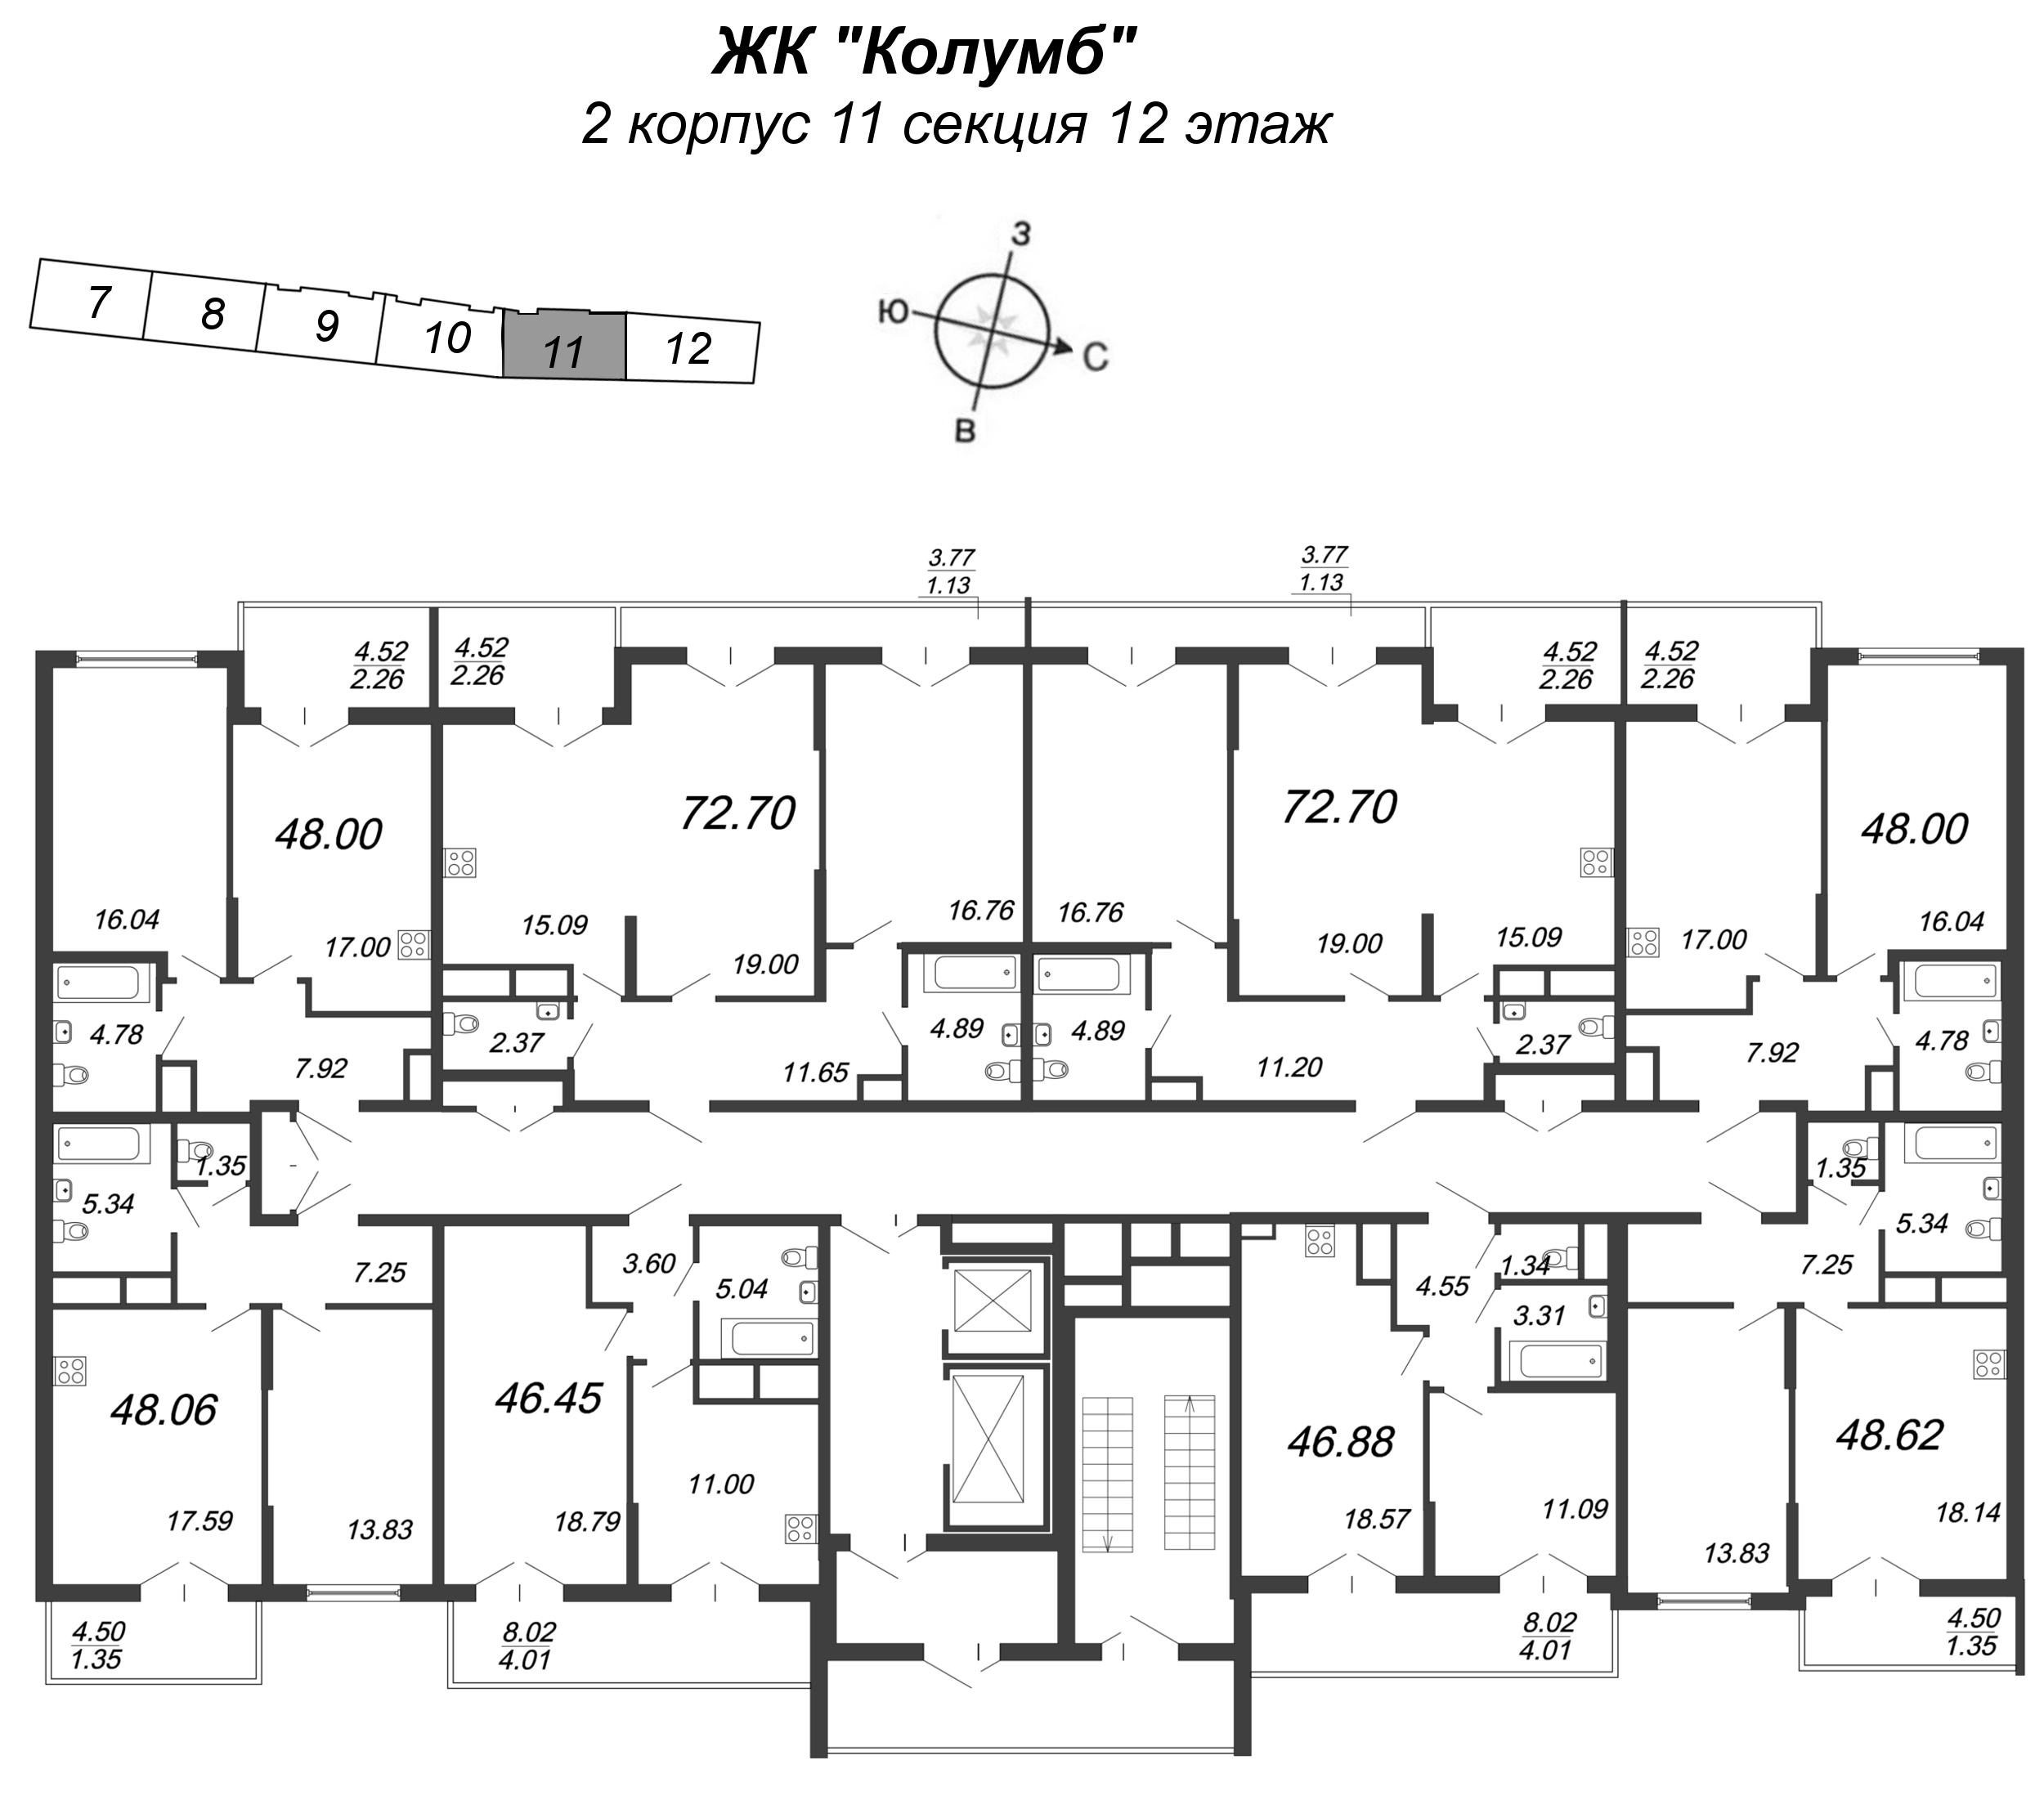 2-комнатная (Евро) квартира, 47.9 м² в ЖК "Колумб" - планировка этажа